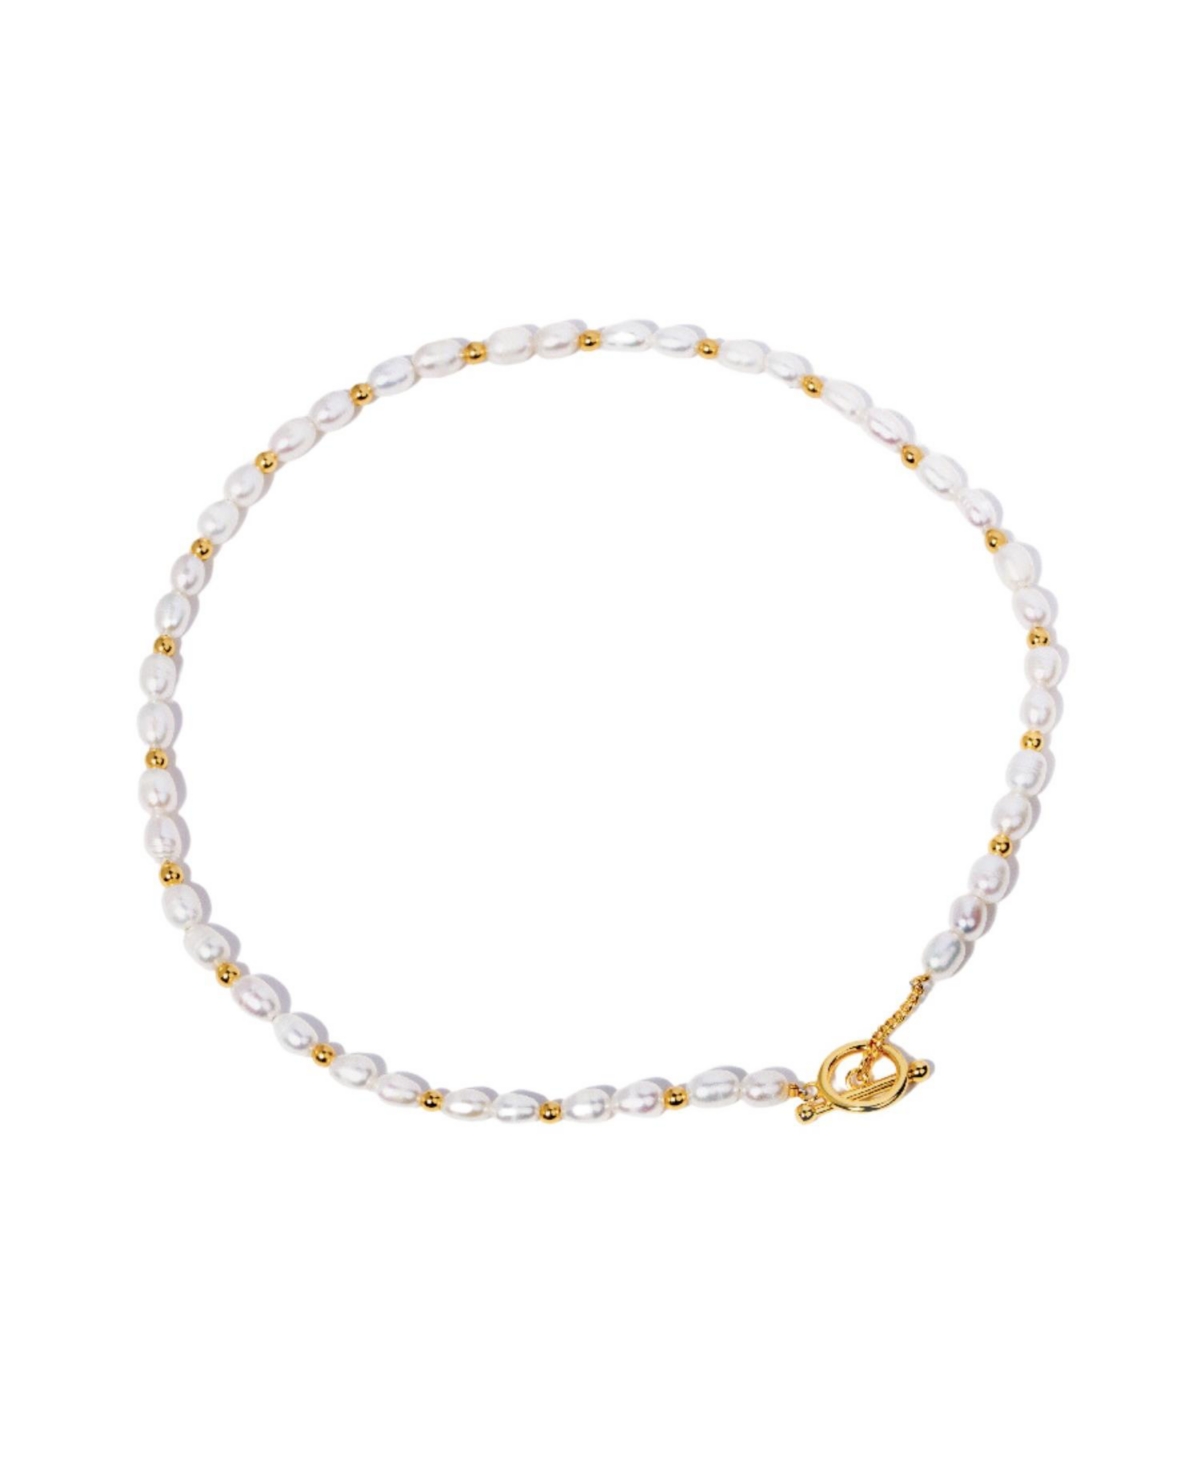 Women's Freshwater Pearl Bead Choker Necklace - White